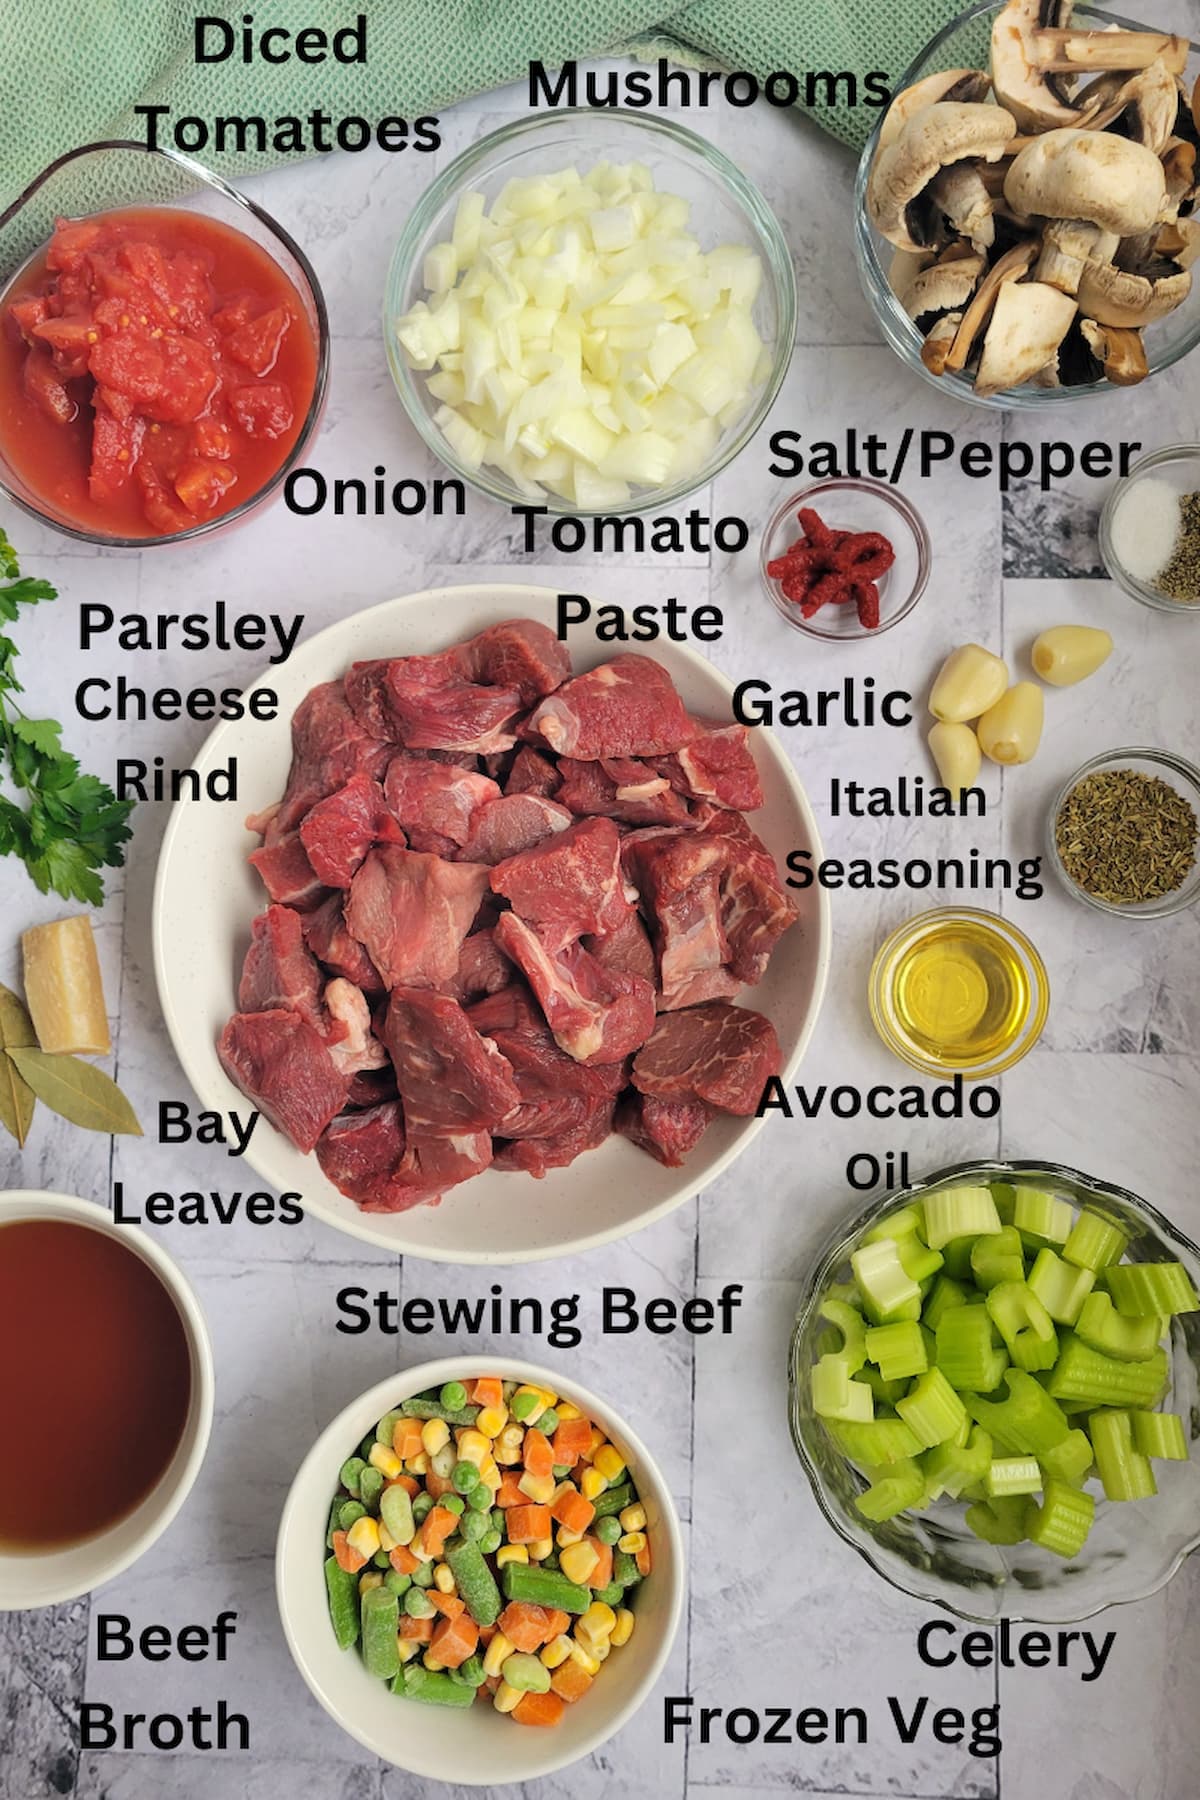 ingredients for beef with vegetable soup - stewing beef, frozen, veg, mushrooms, diced tomatoes, onions, tomato paste, salt/pepper, garlic, italian seasoning, avocado oil, celery, beef broth, cheese rind, bay leaves, parsley